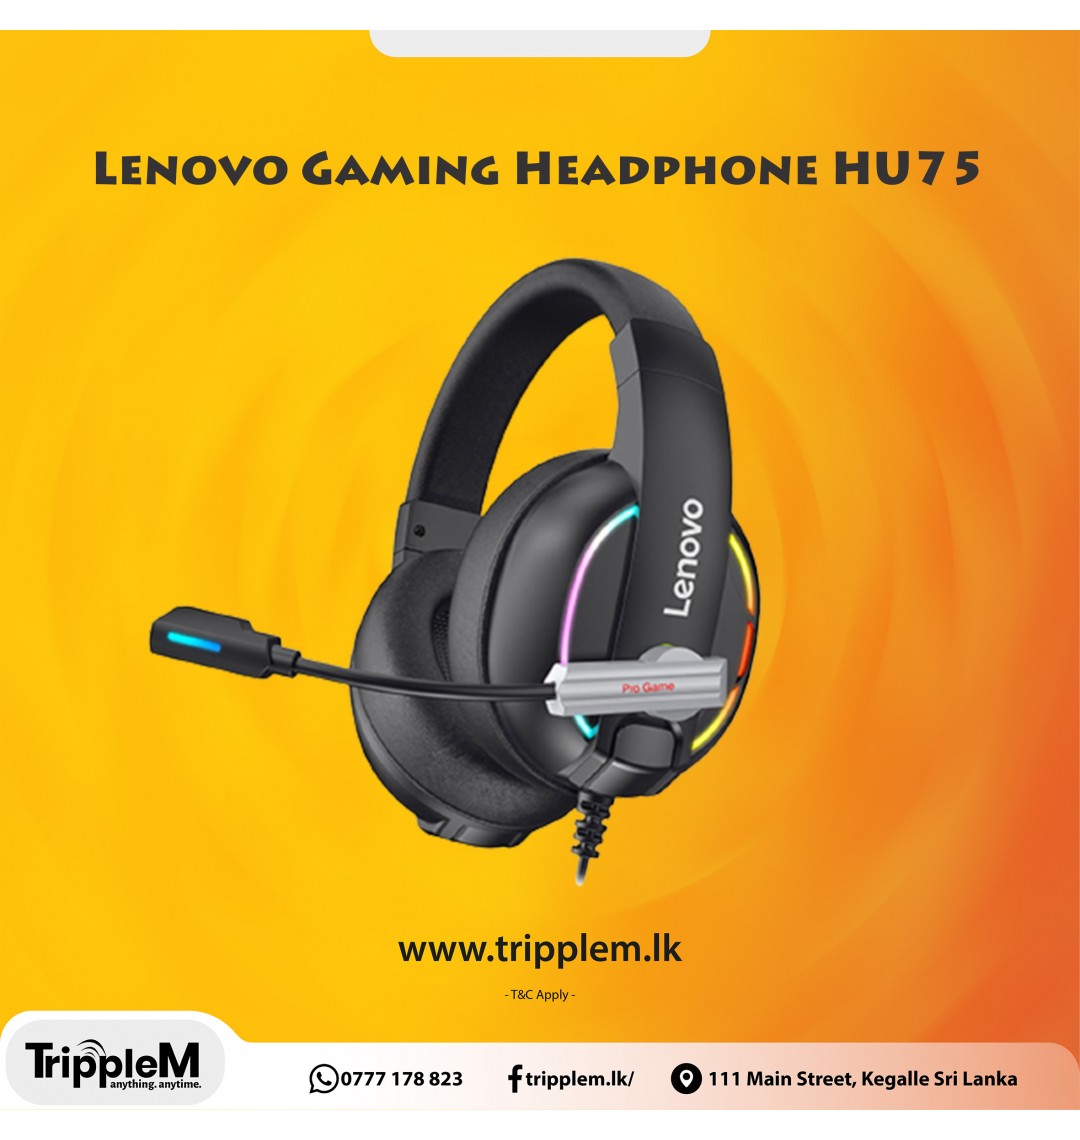 Lenovo Gaming Headphone HU75